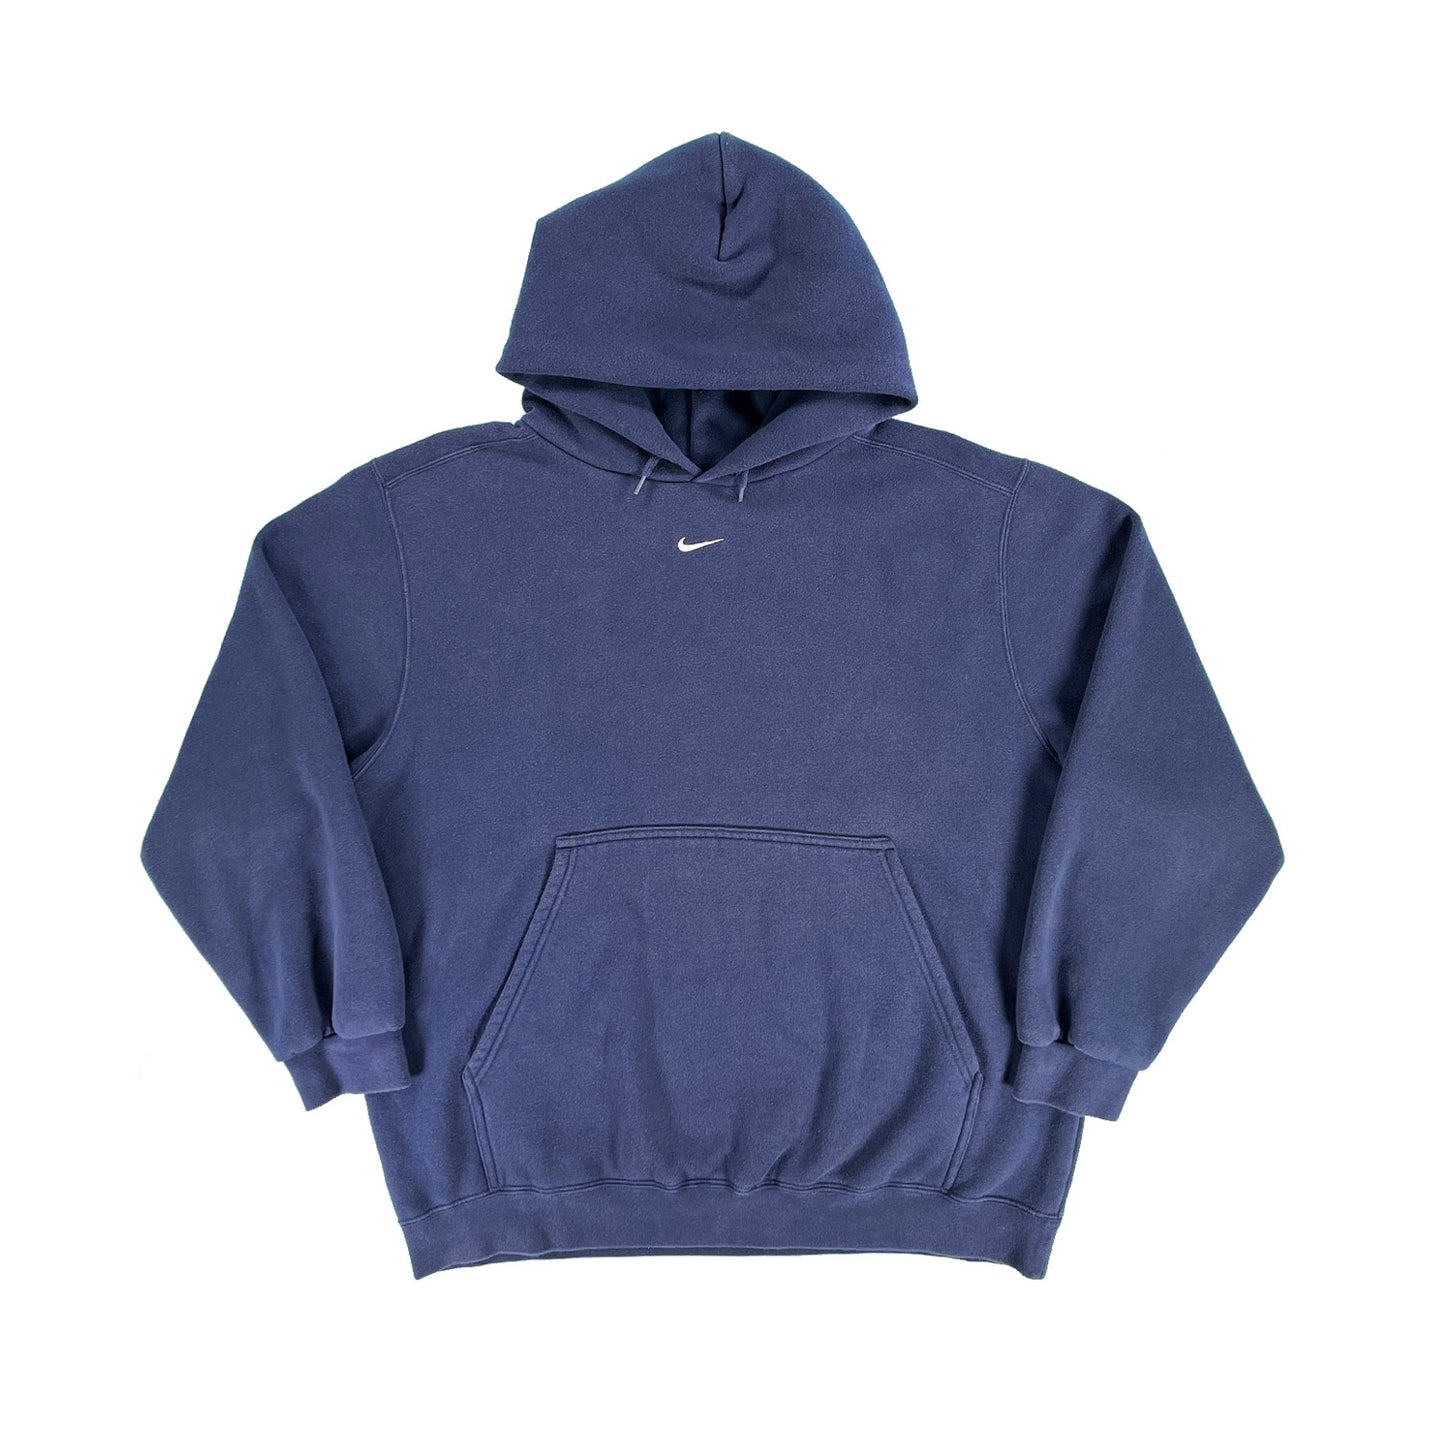 '90s Nike mid check hoodie blue L